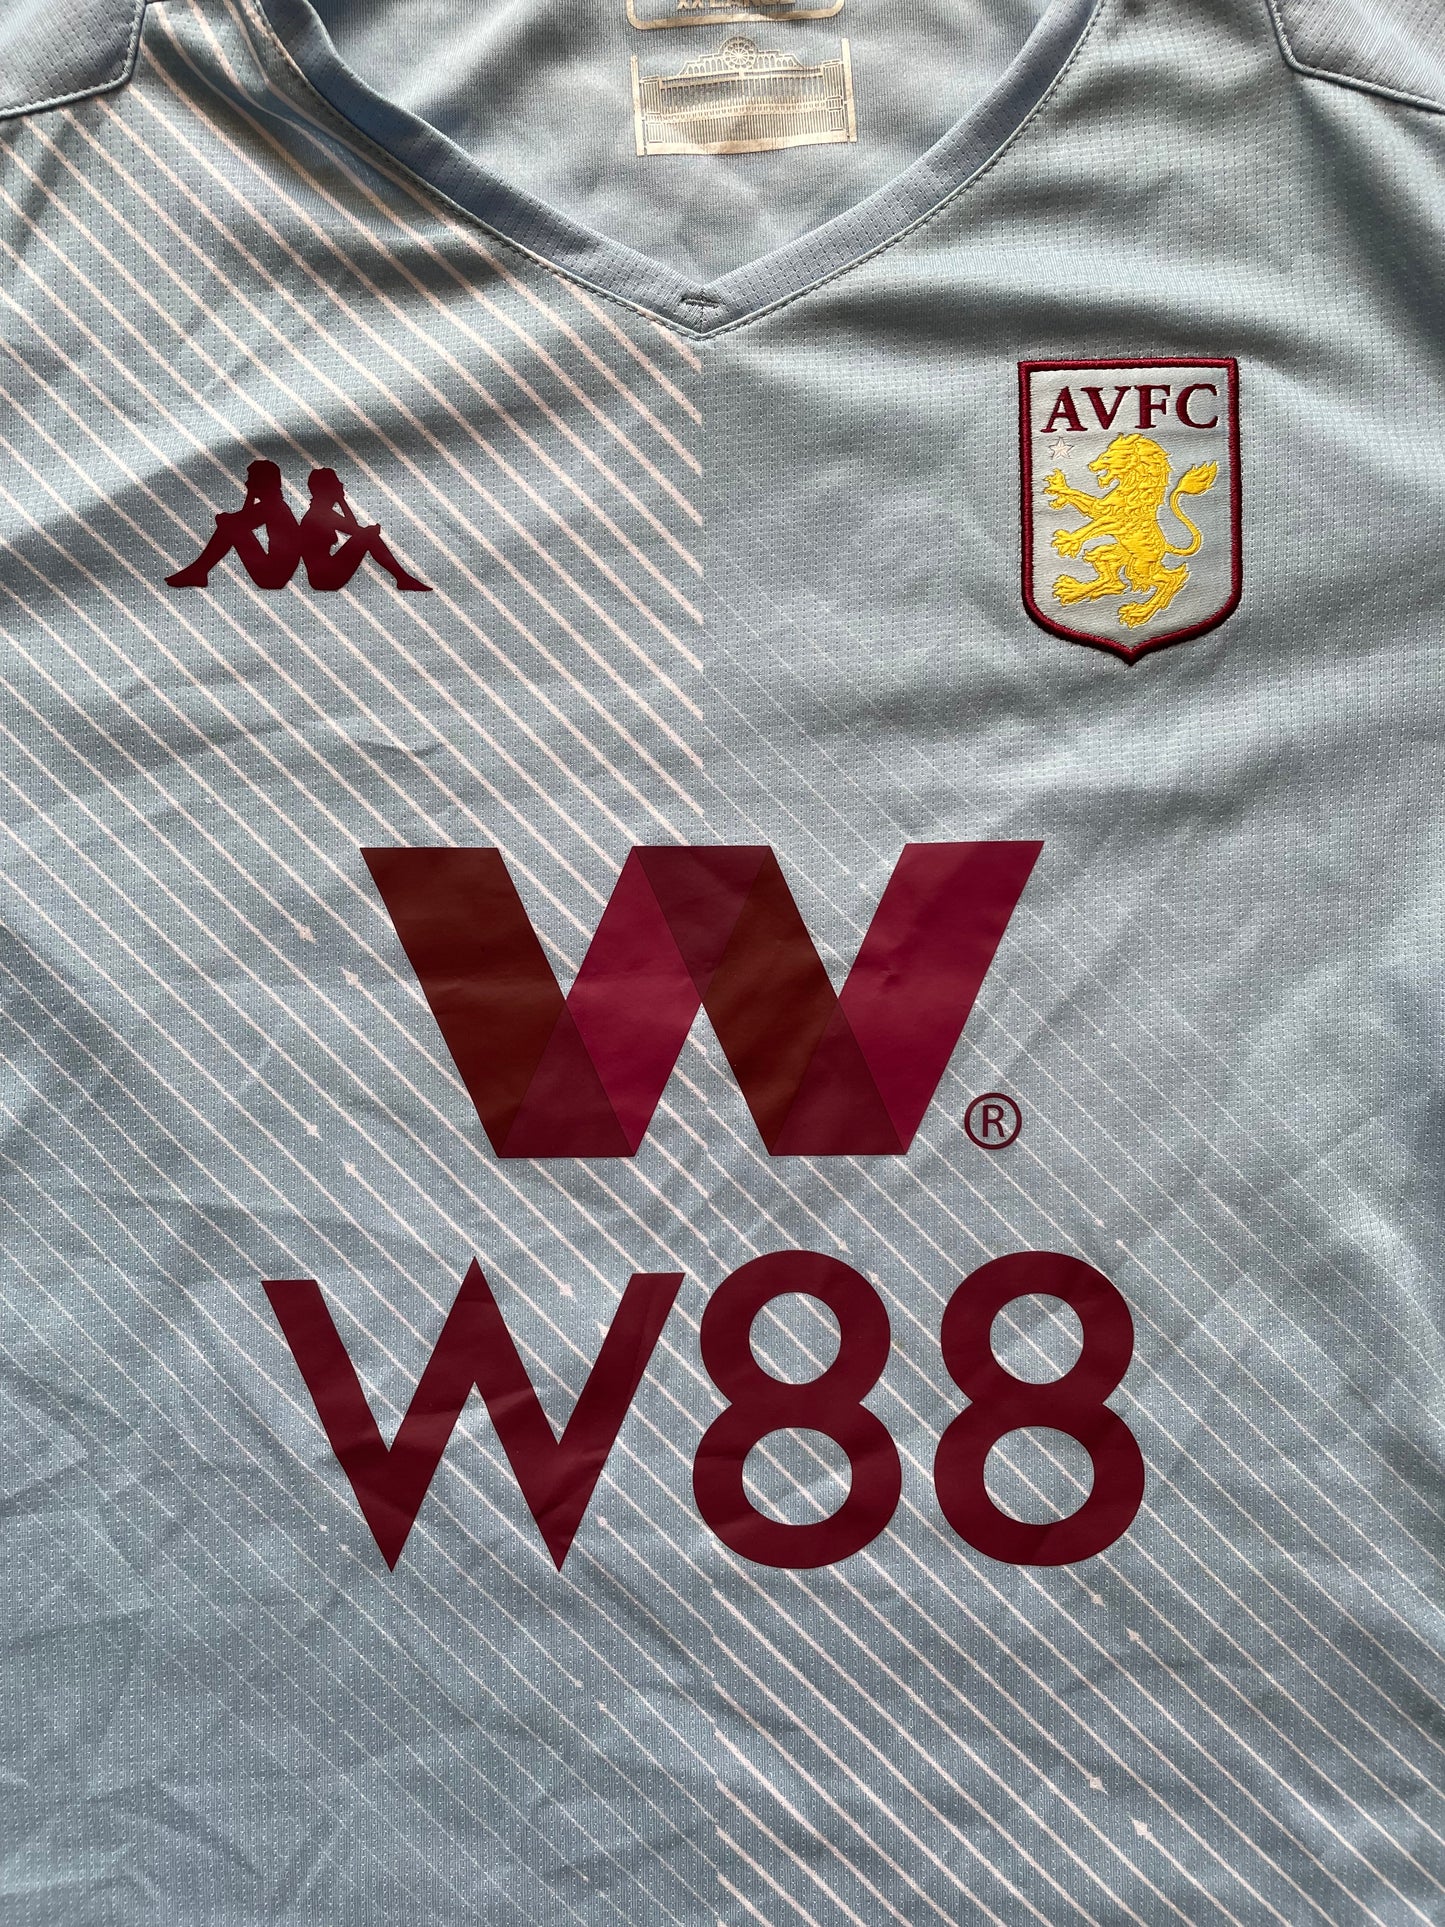 Aston Villa 2019 Away Shirt (excellent) Ladies 2XL